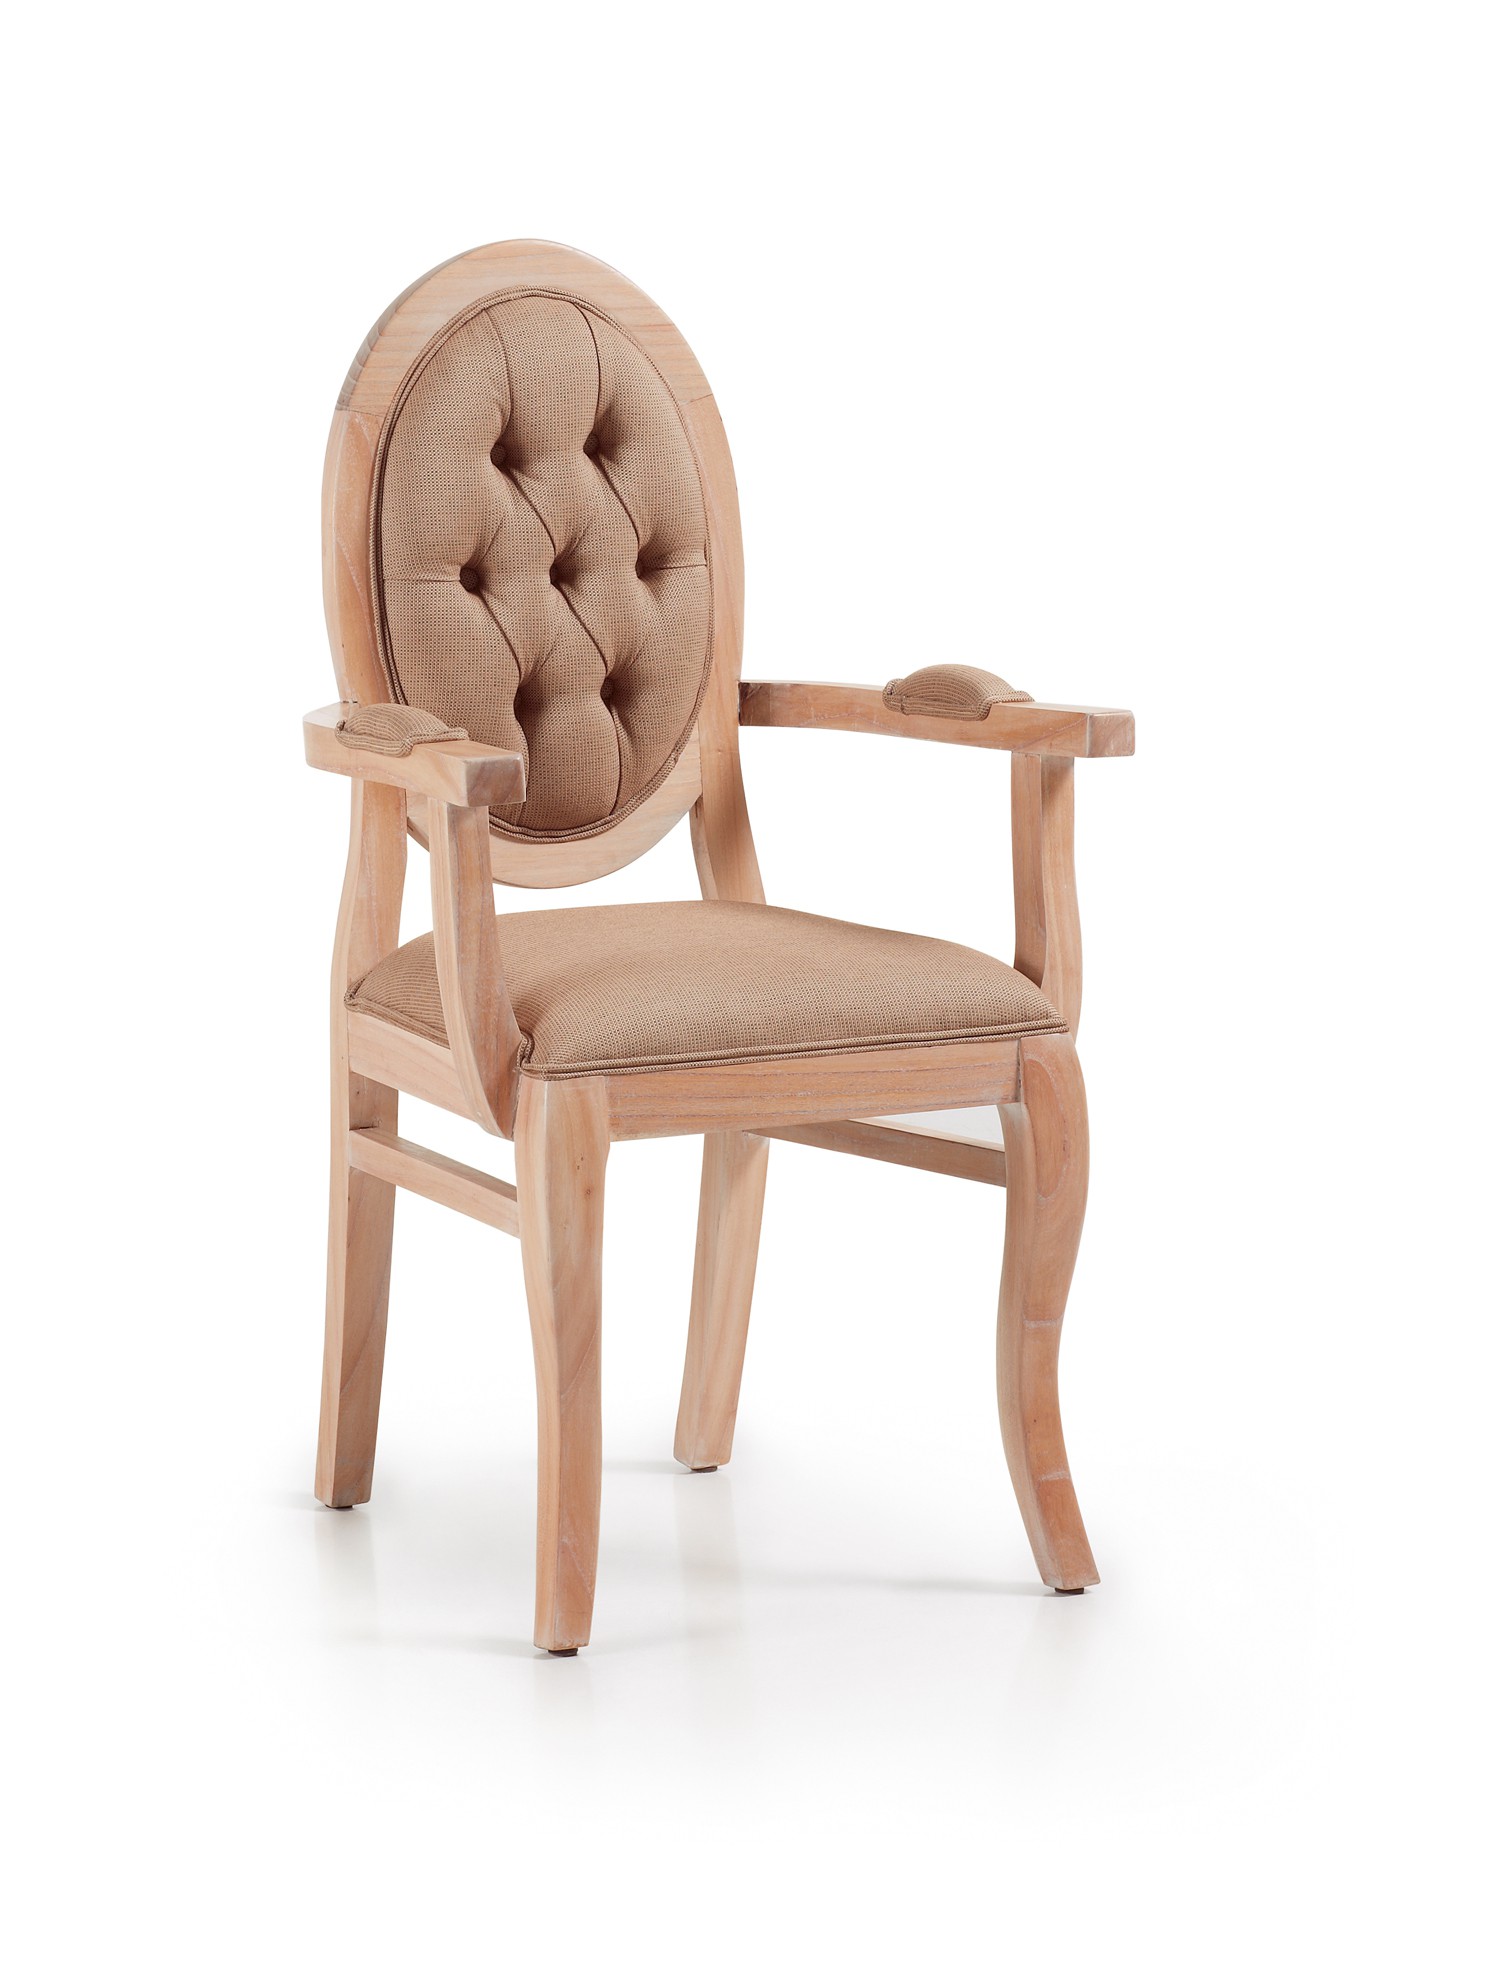 Jedálenská stolička Bromo v chesterfield štýle